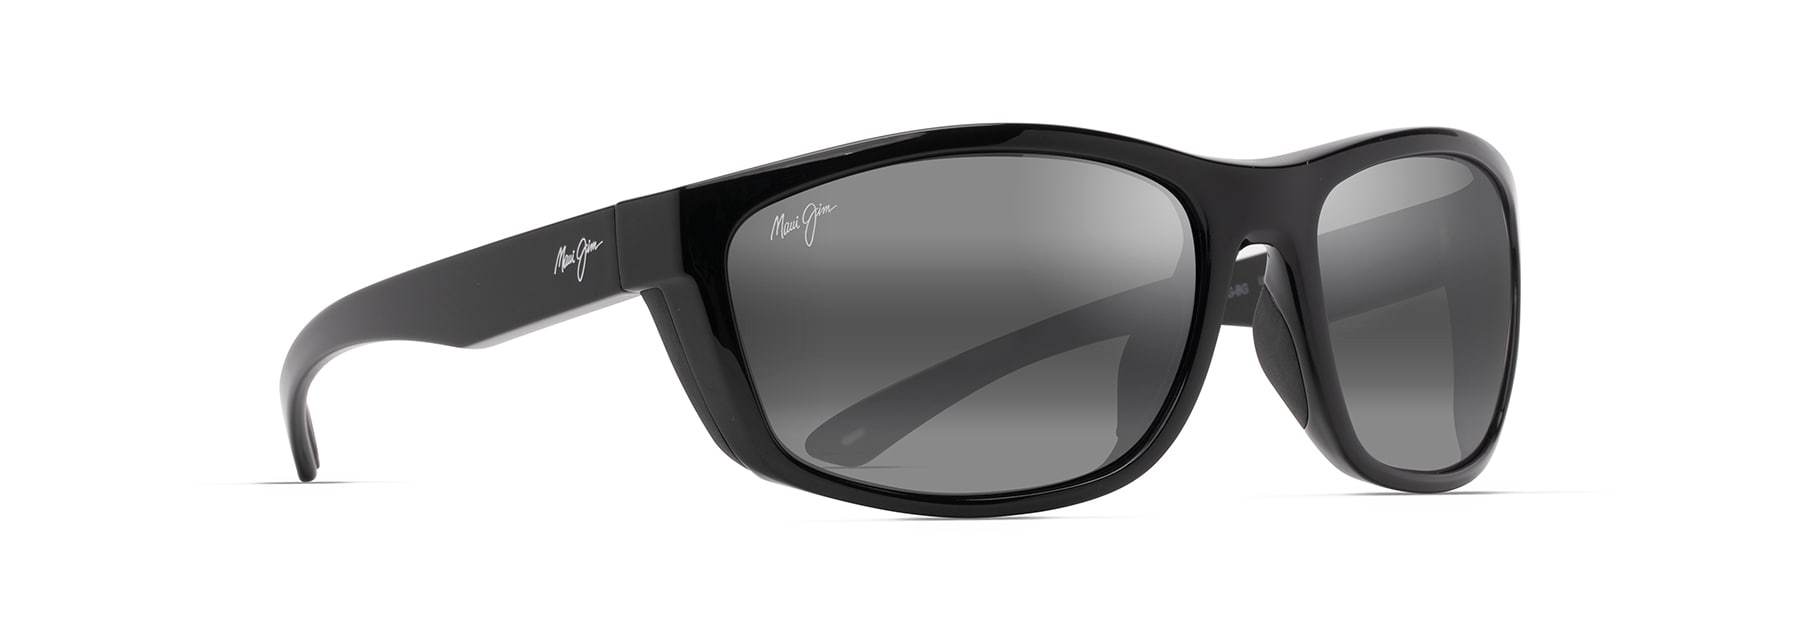 Maui Jim Pailolo 603 Sunglasses: 603-02, B603-03, H603-10, RM603-14 -  Flight Sunglasses